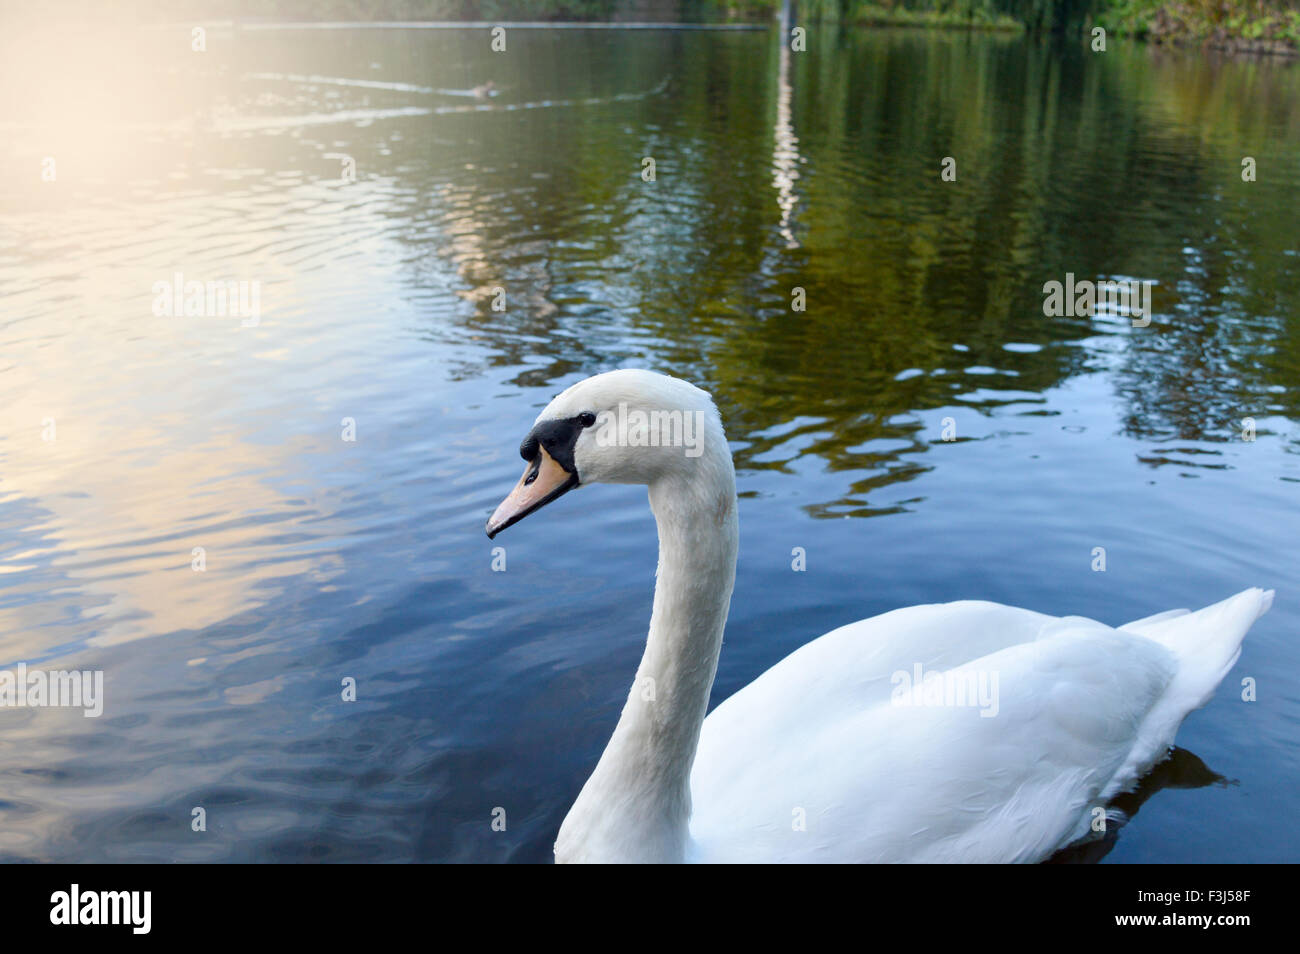 Swan swimming in a calm lake Stock Photo